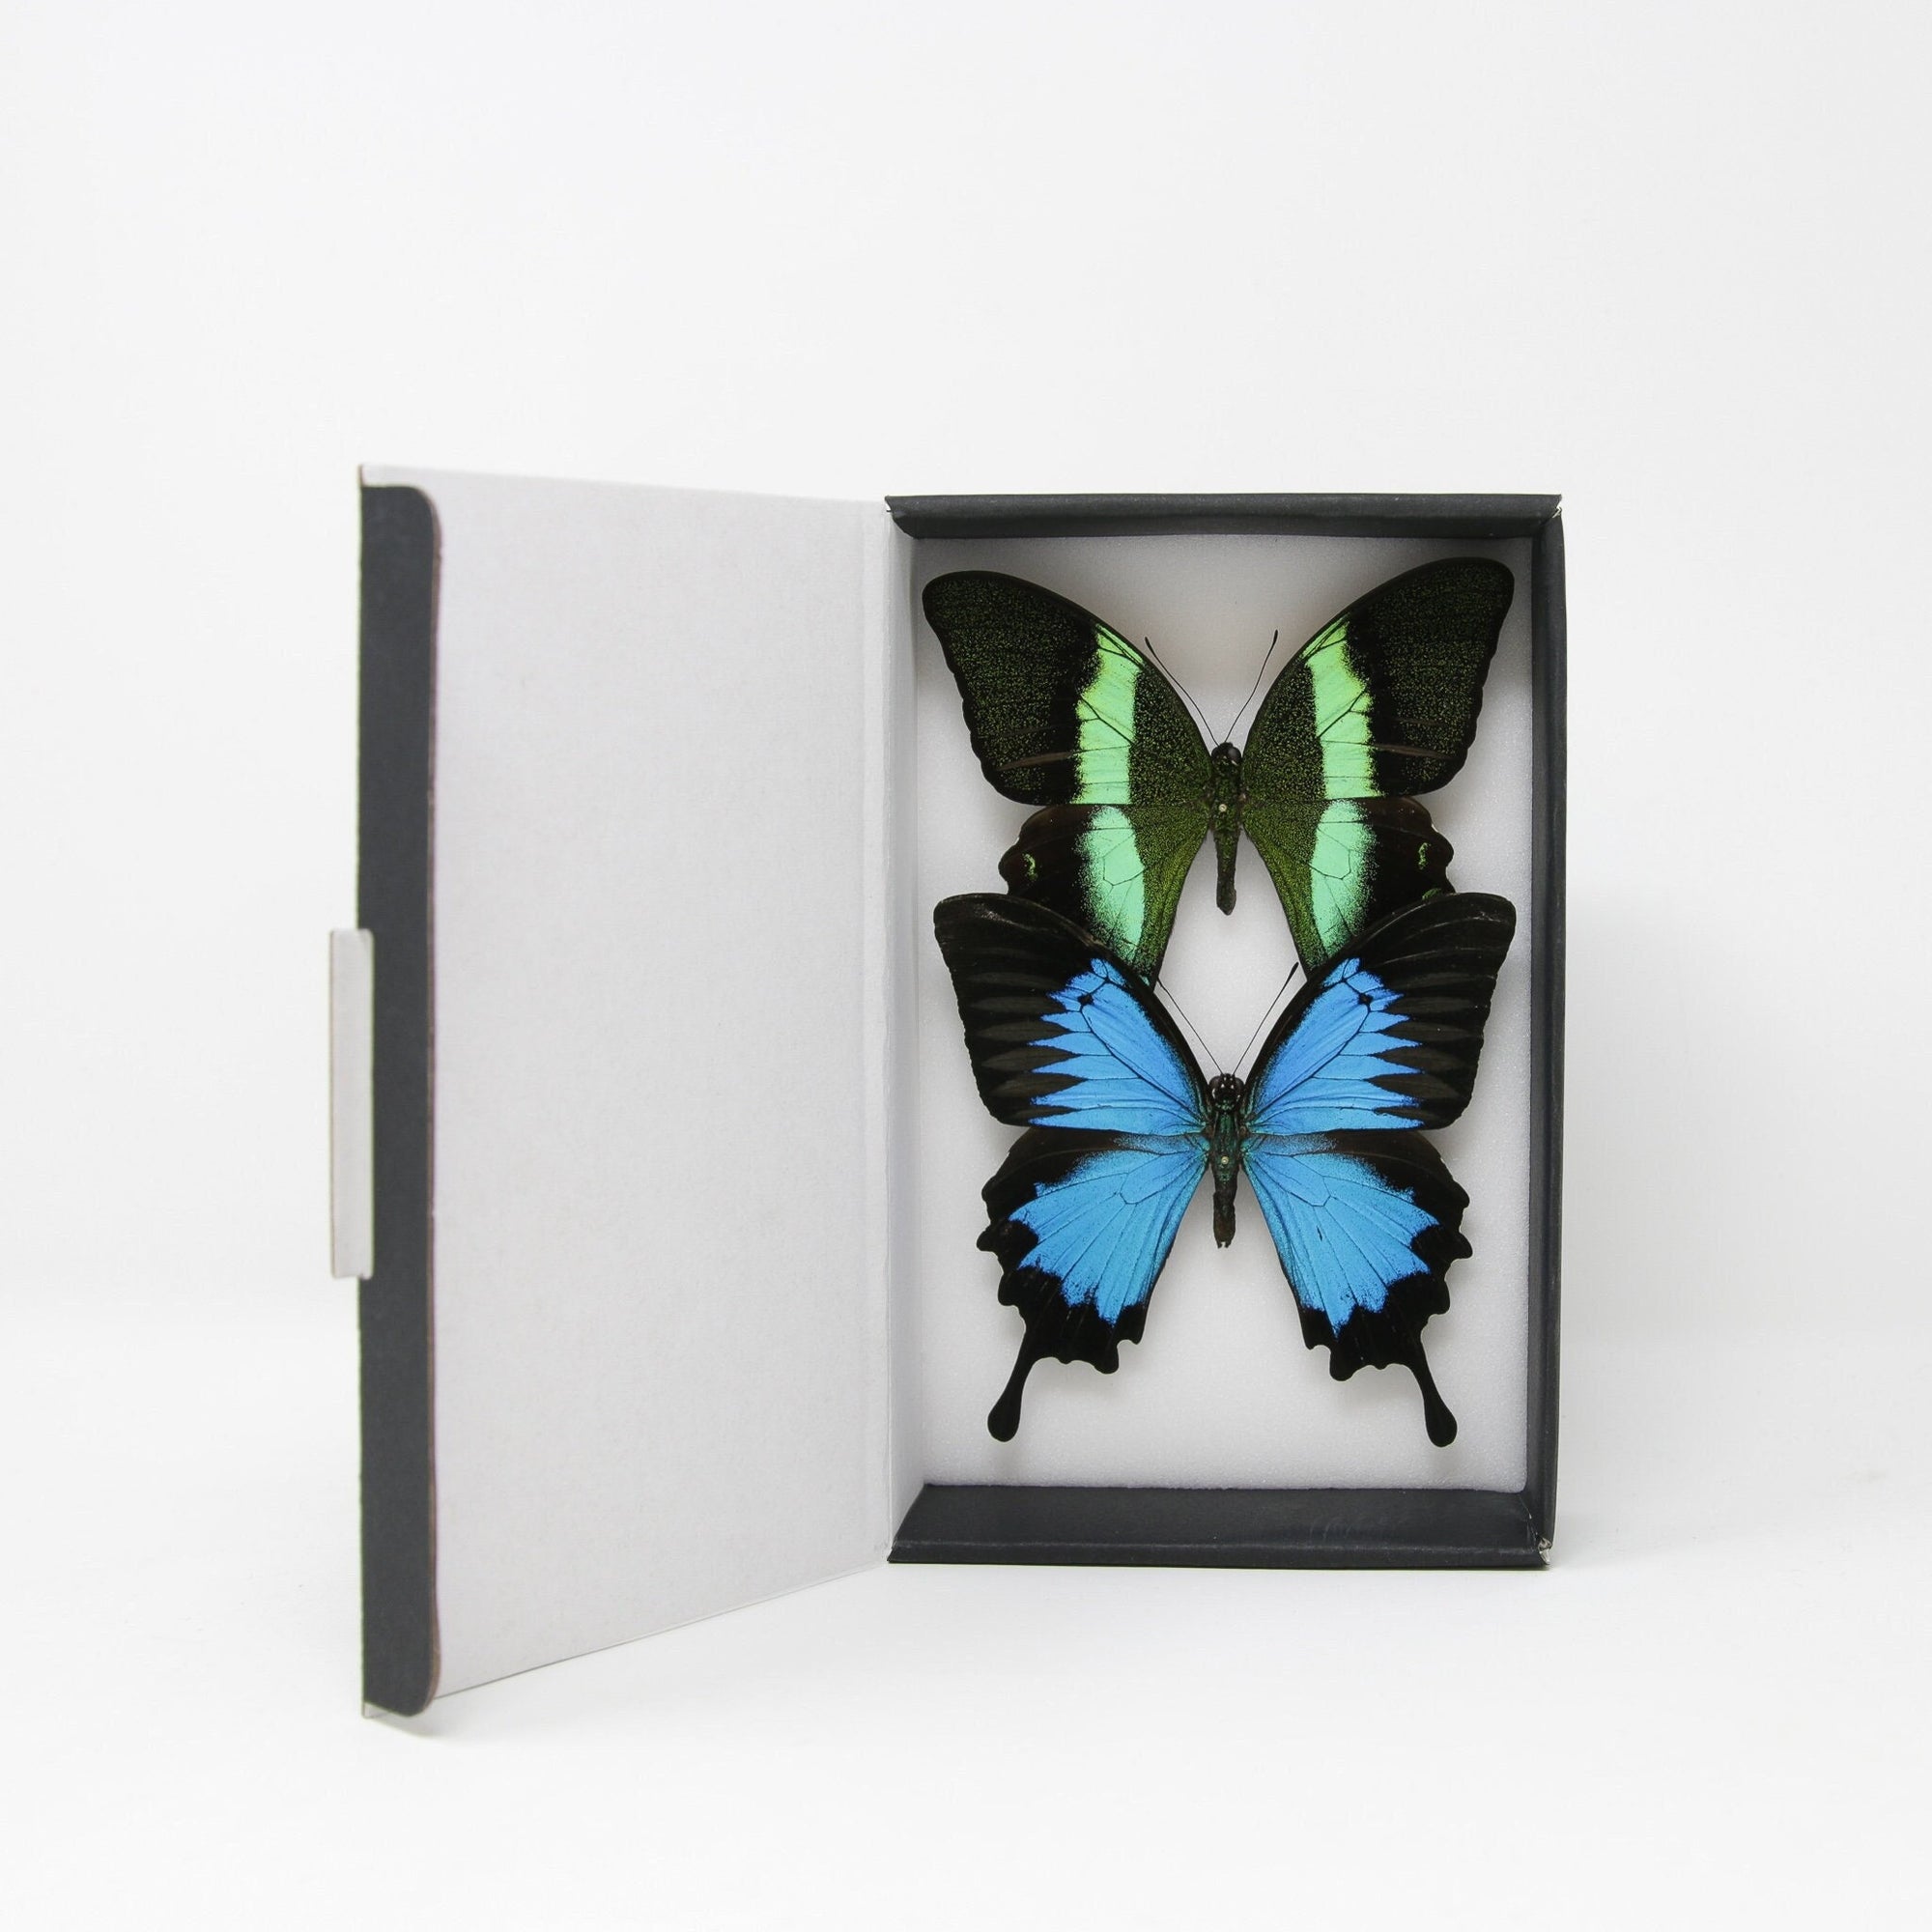 TWO (2) Green & Blue SWALLOWTAIL Butterflies (Papilio blumei, P. ulysses) A1 Spread Specimens